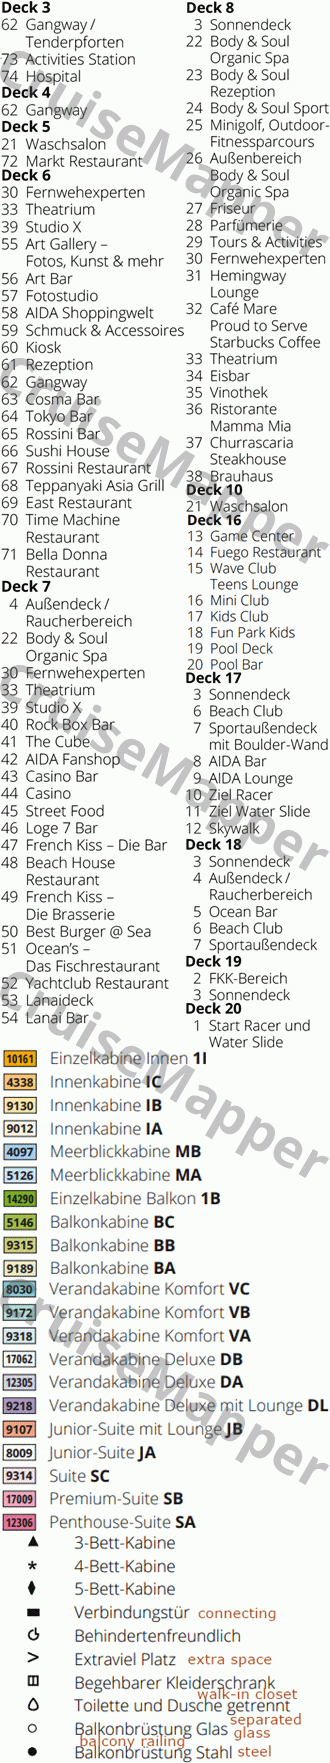 AIDAcosma deck 19 plan (FKK-Sundeck) legend